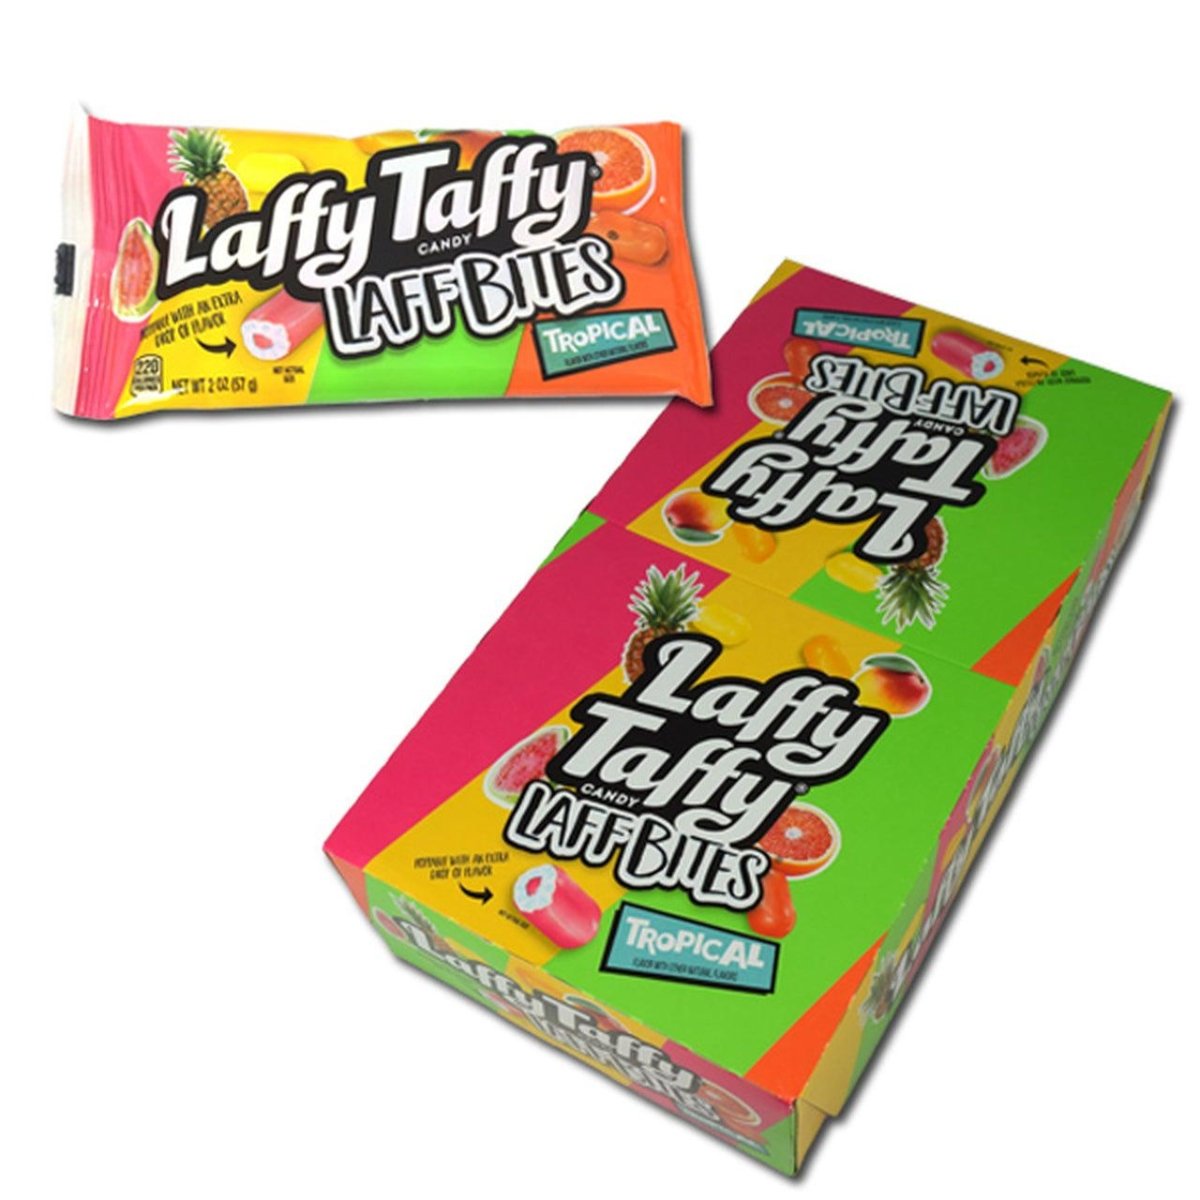 Laffy Taffy Laff Bites Tropical 58g - Candy Mail UK